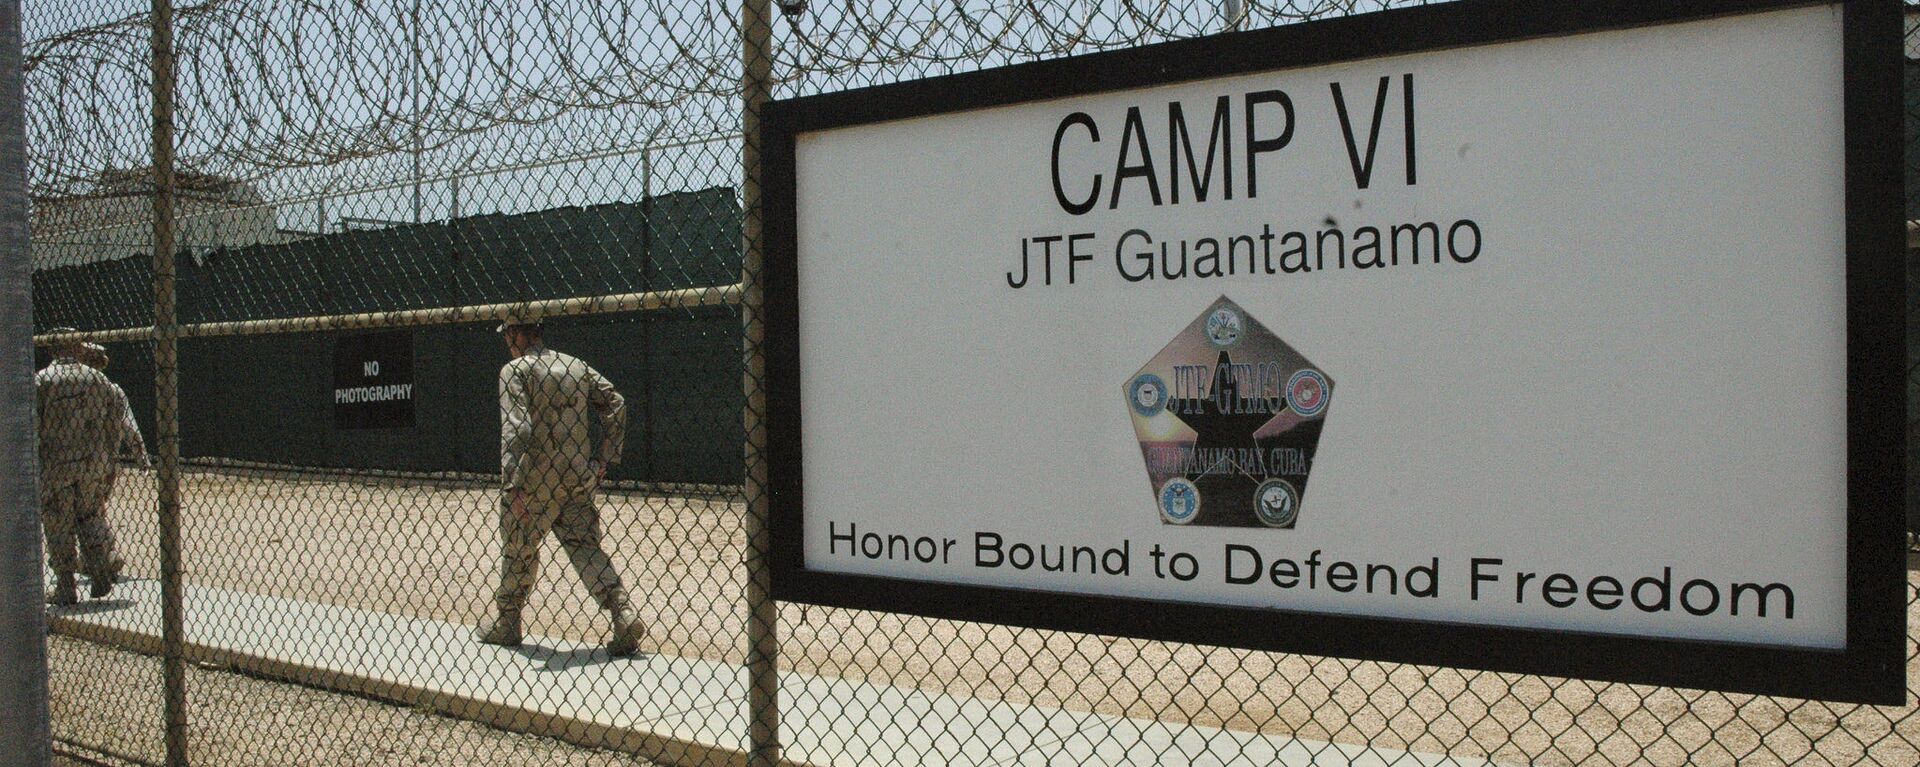 Guantanamo detention center - Sputnik International, 1920, 17.02.2018